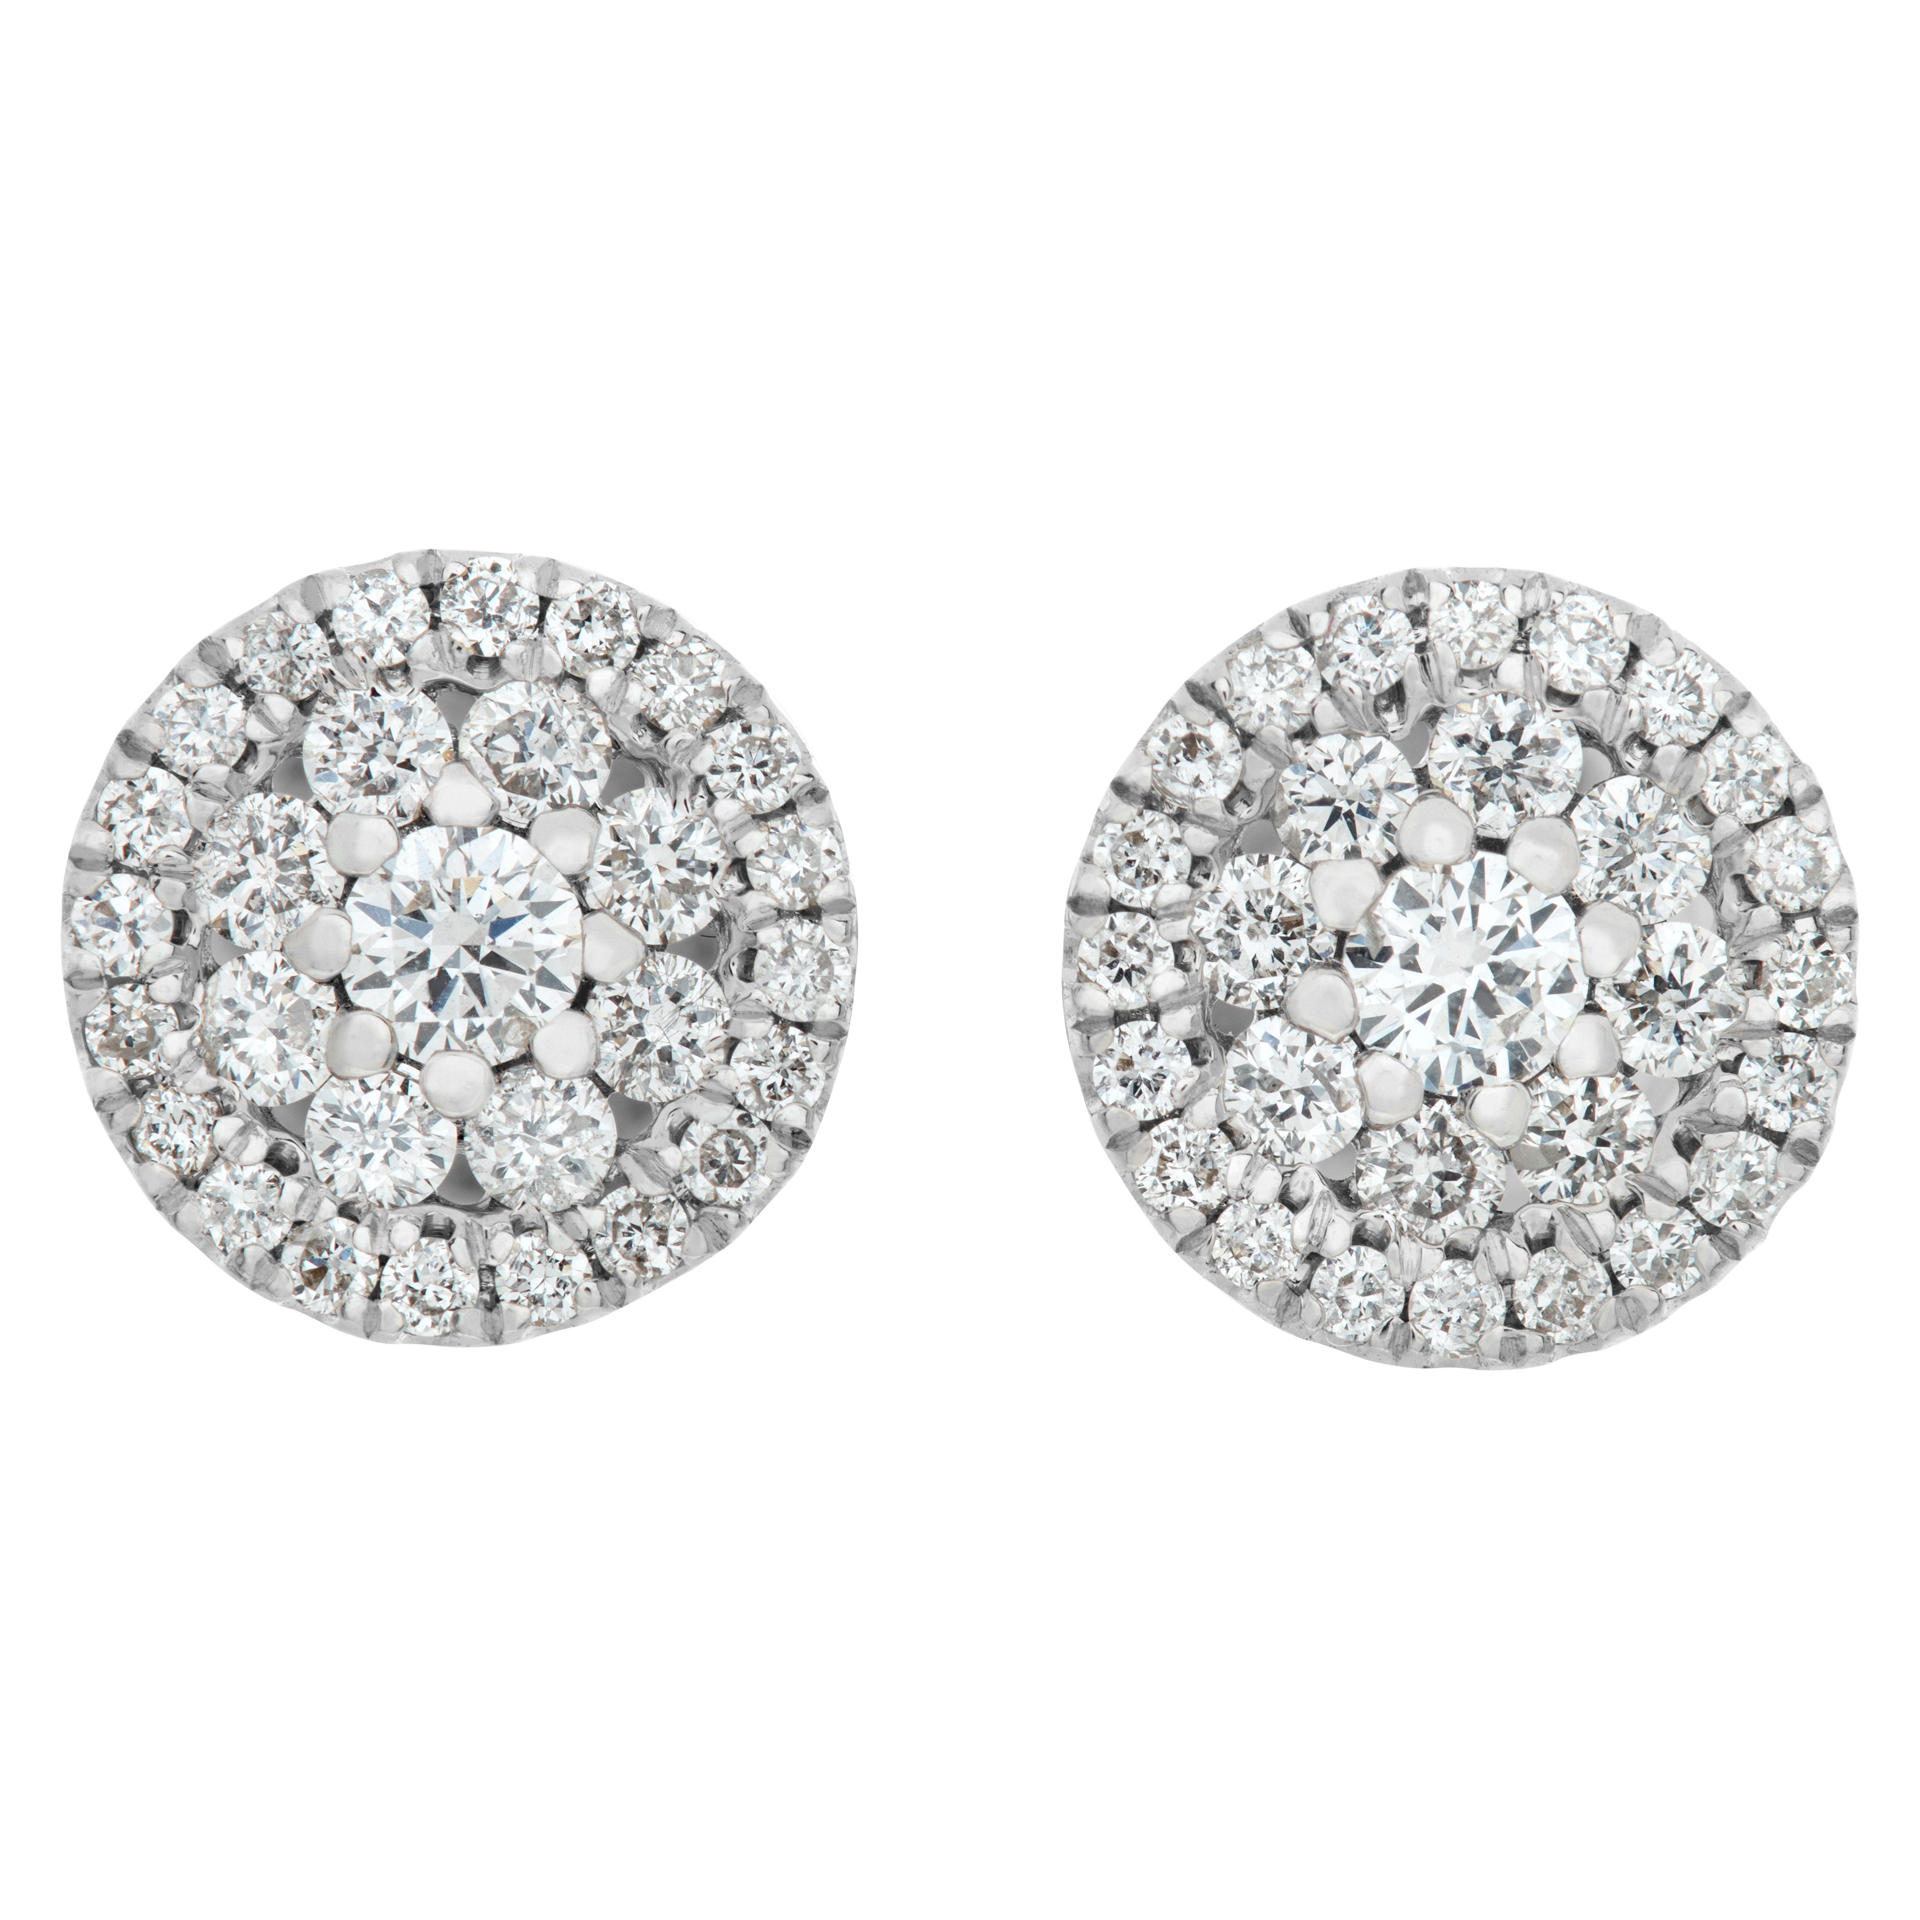 Sparkly 18k white gold stud earrings 0.40 carat in diamonds